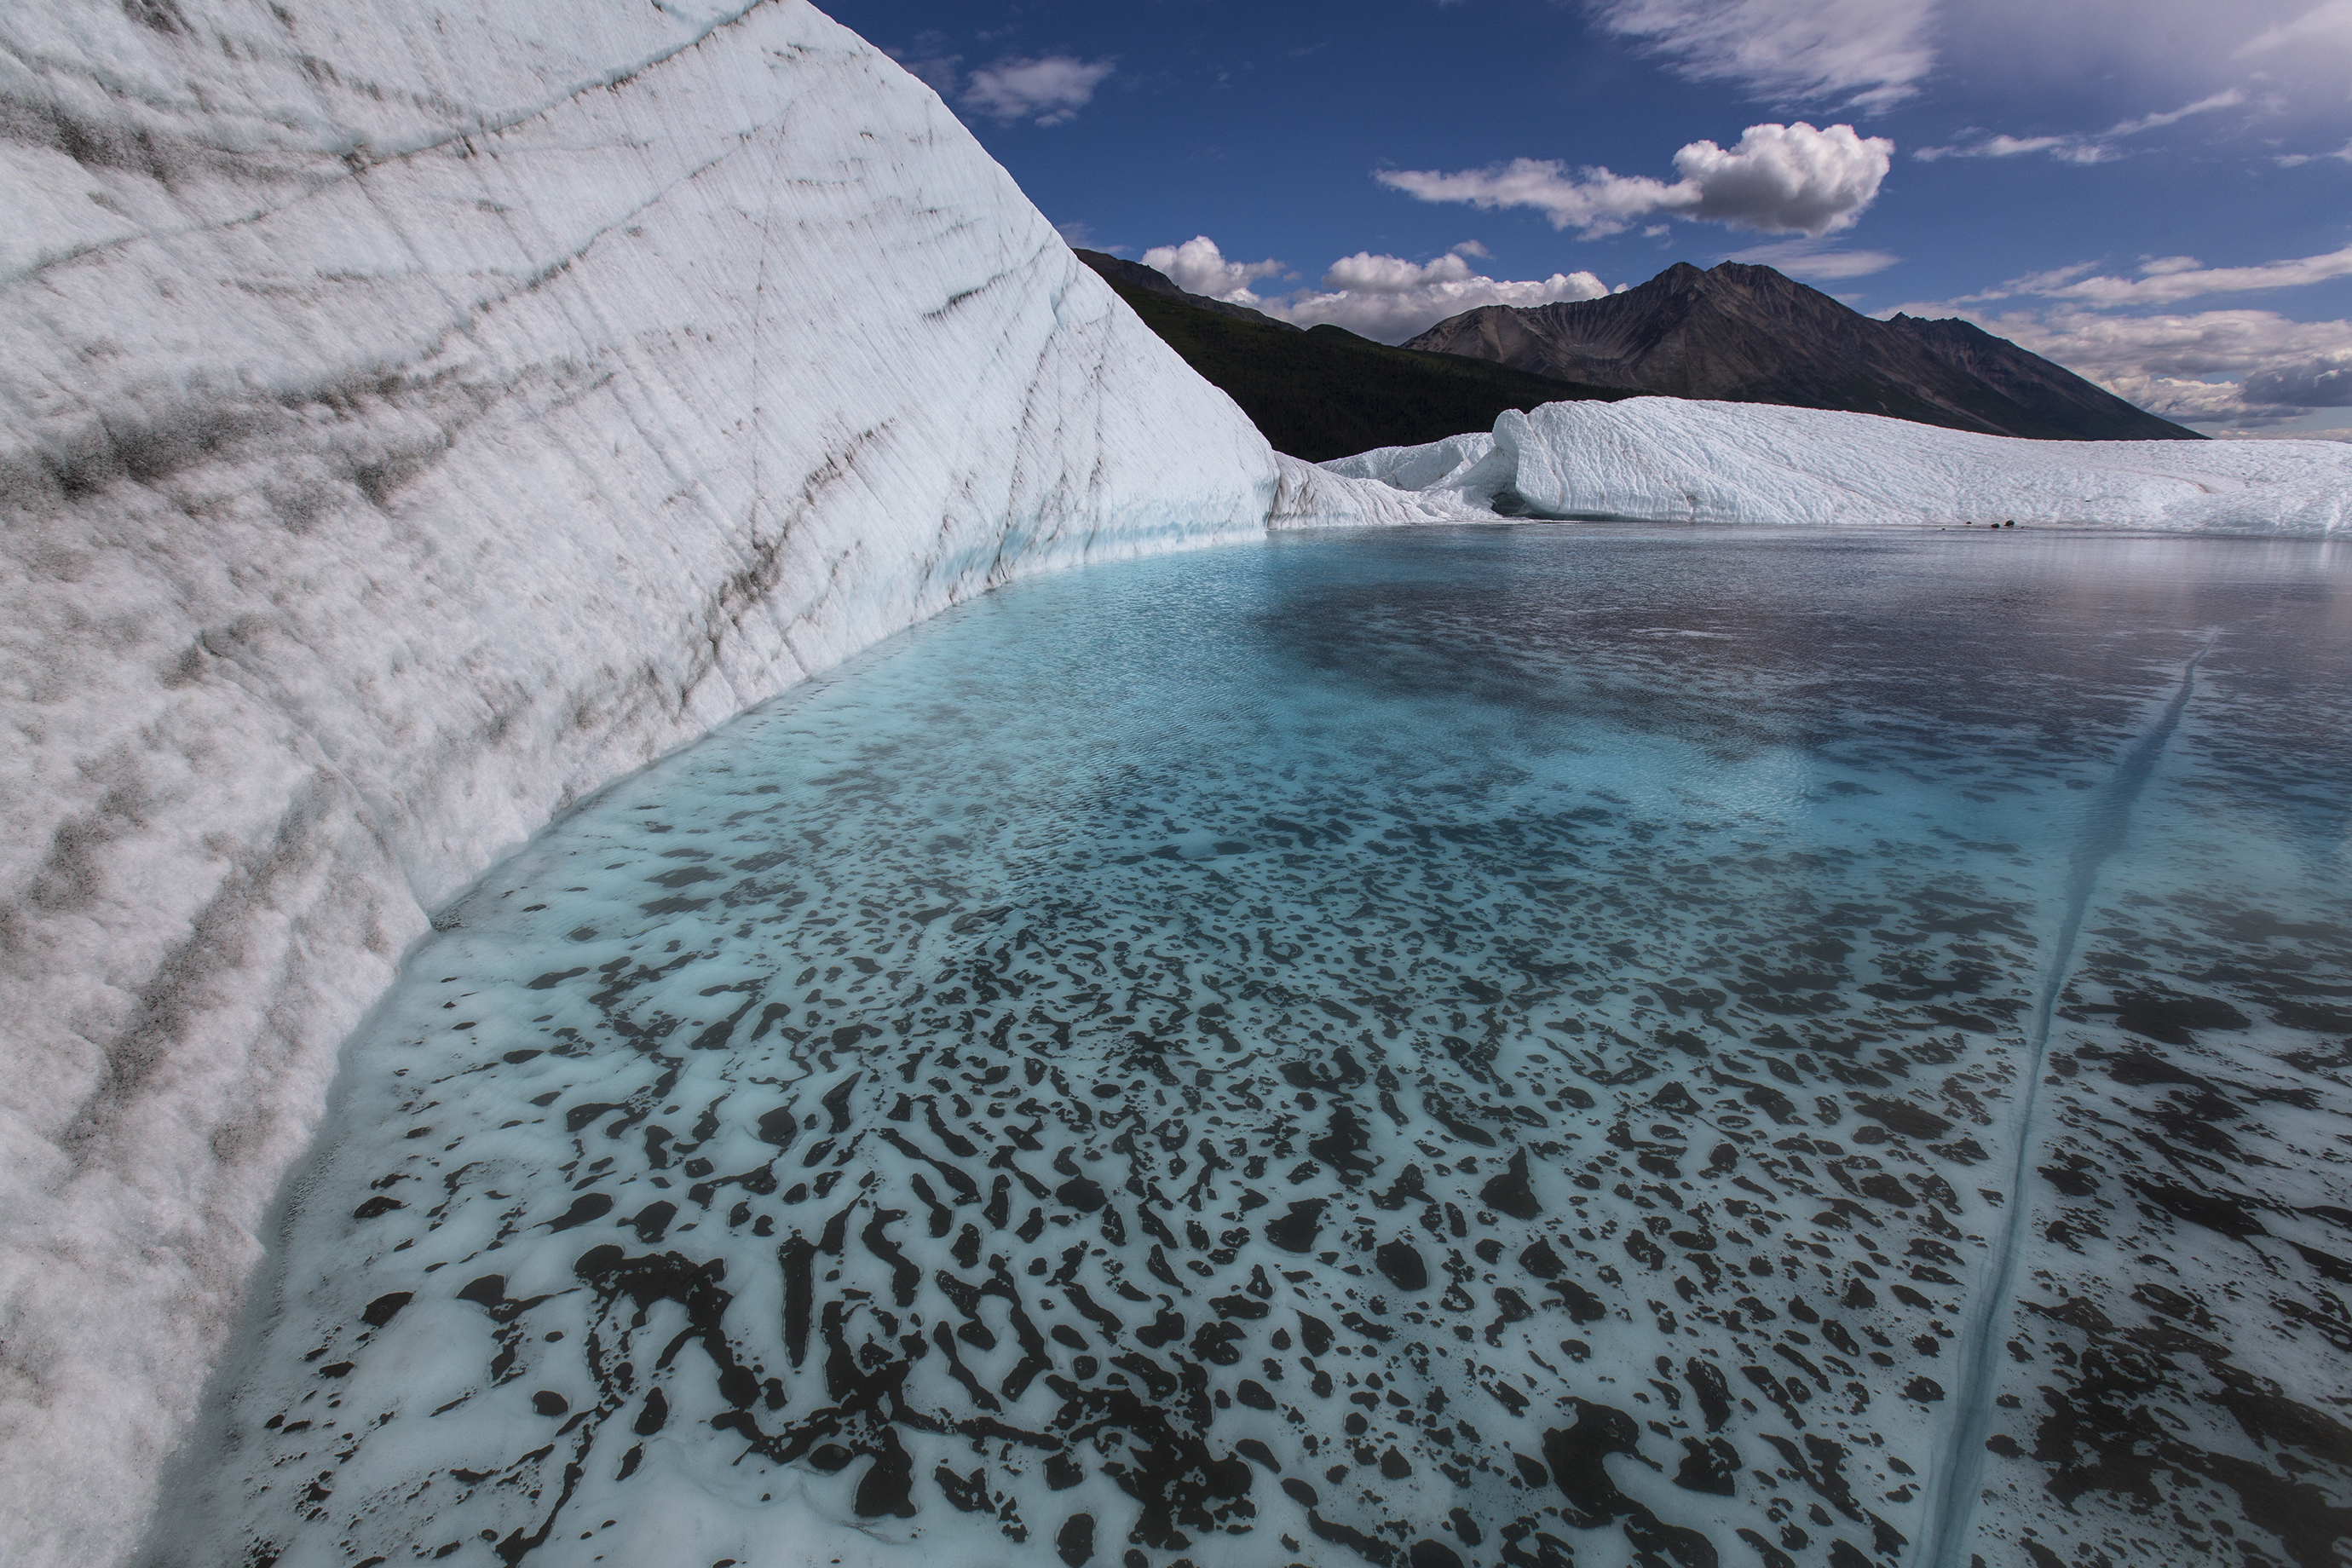 https://www.nps.gov/wrst/learn/nature/images/Pool-on-the-Root-Glacier.jpg